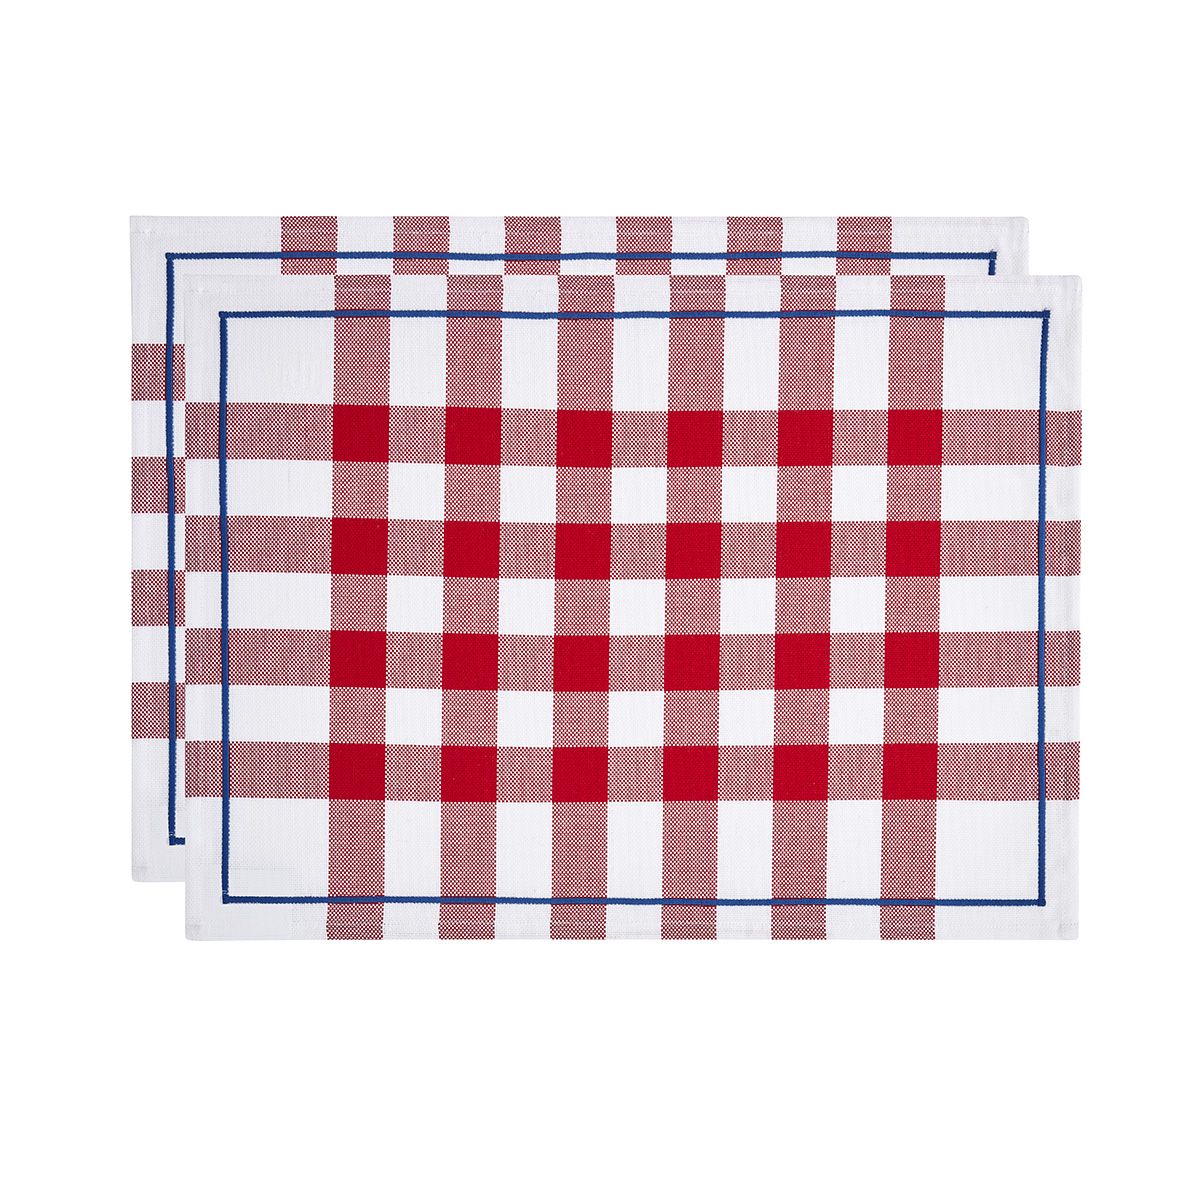 Bistrot Français - Cotton Tablecloth, Placemats, Napkins & Runner